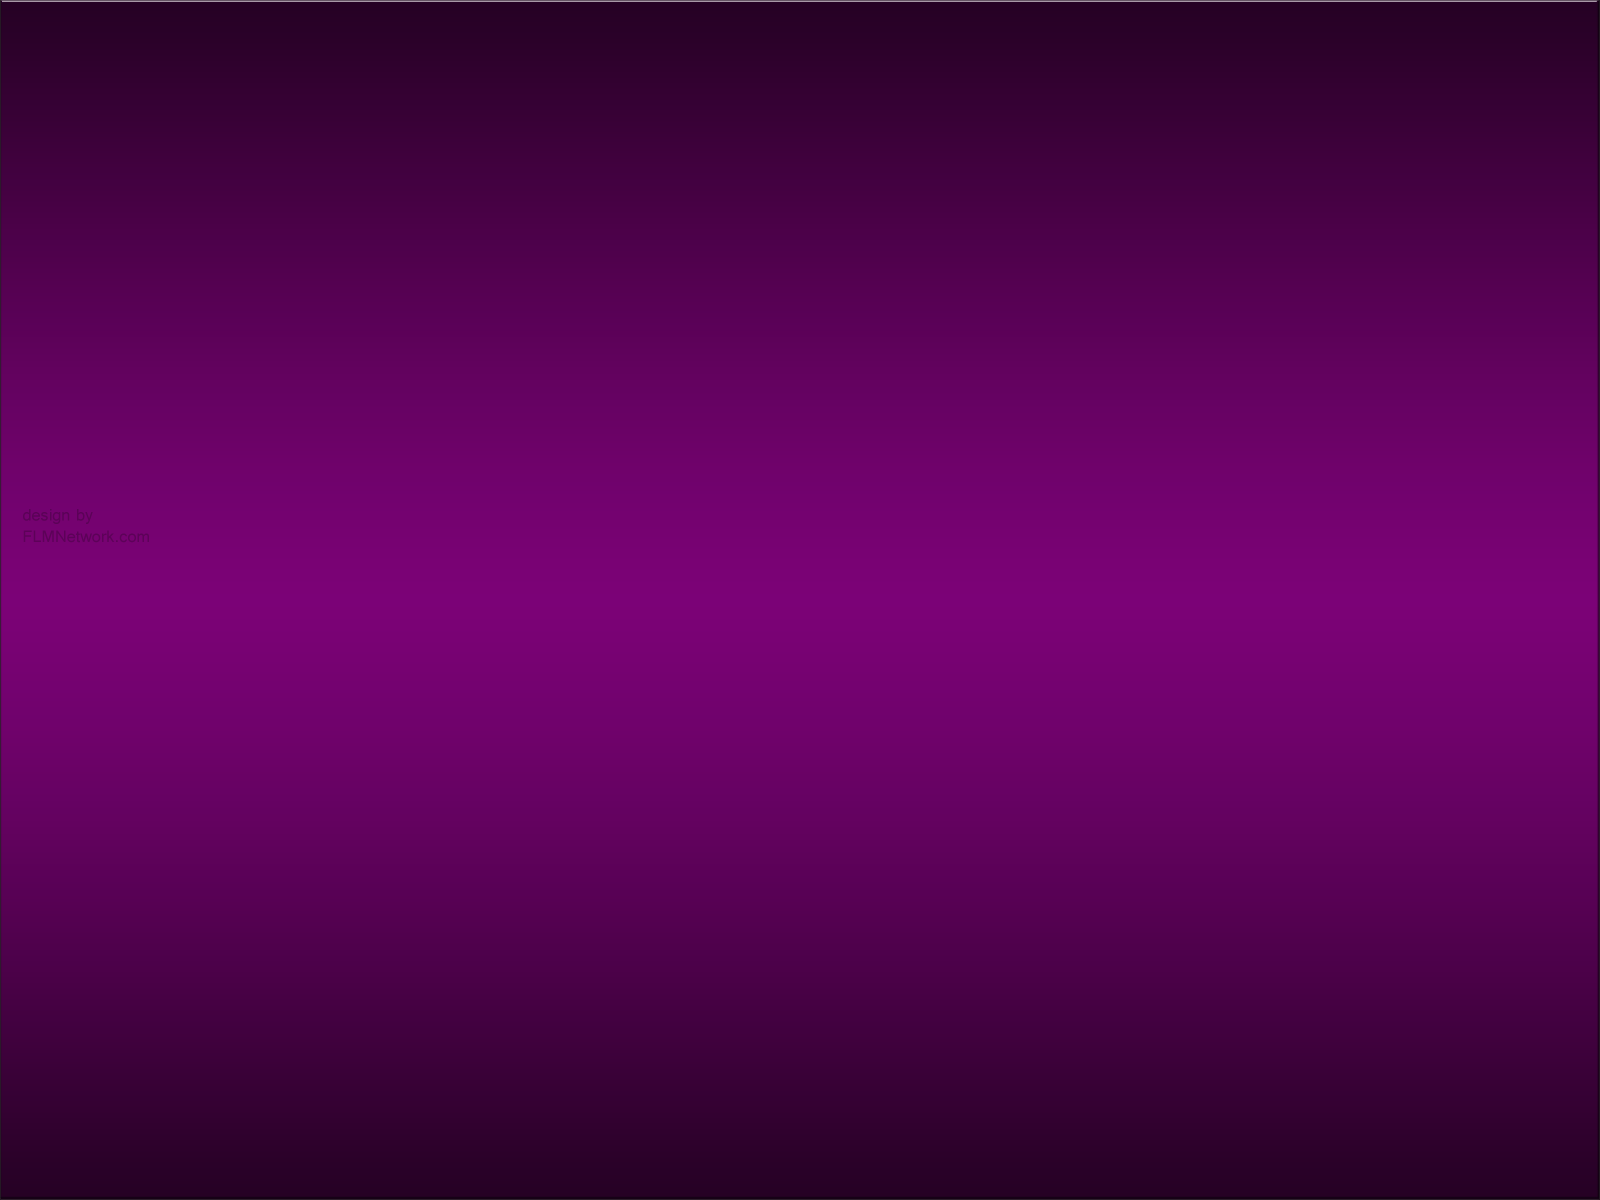 75+] Purple Color Background - WallpaperSafari